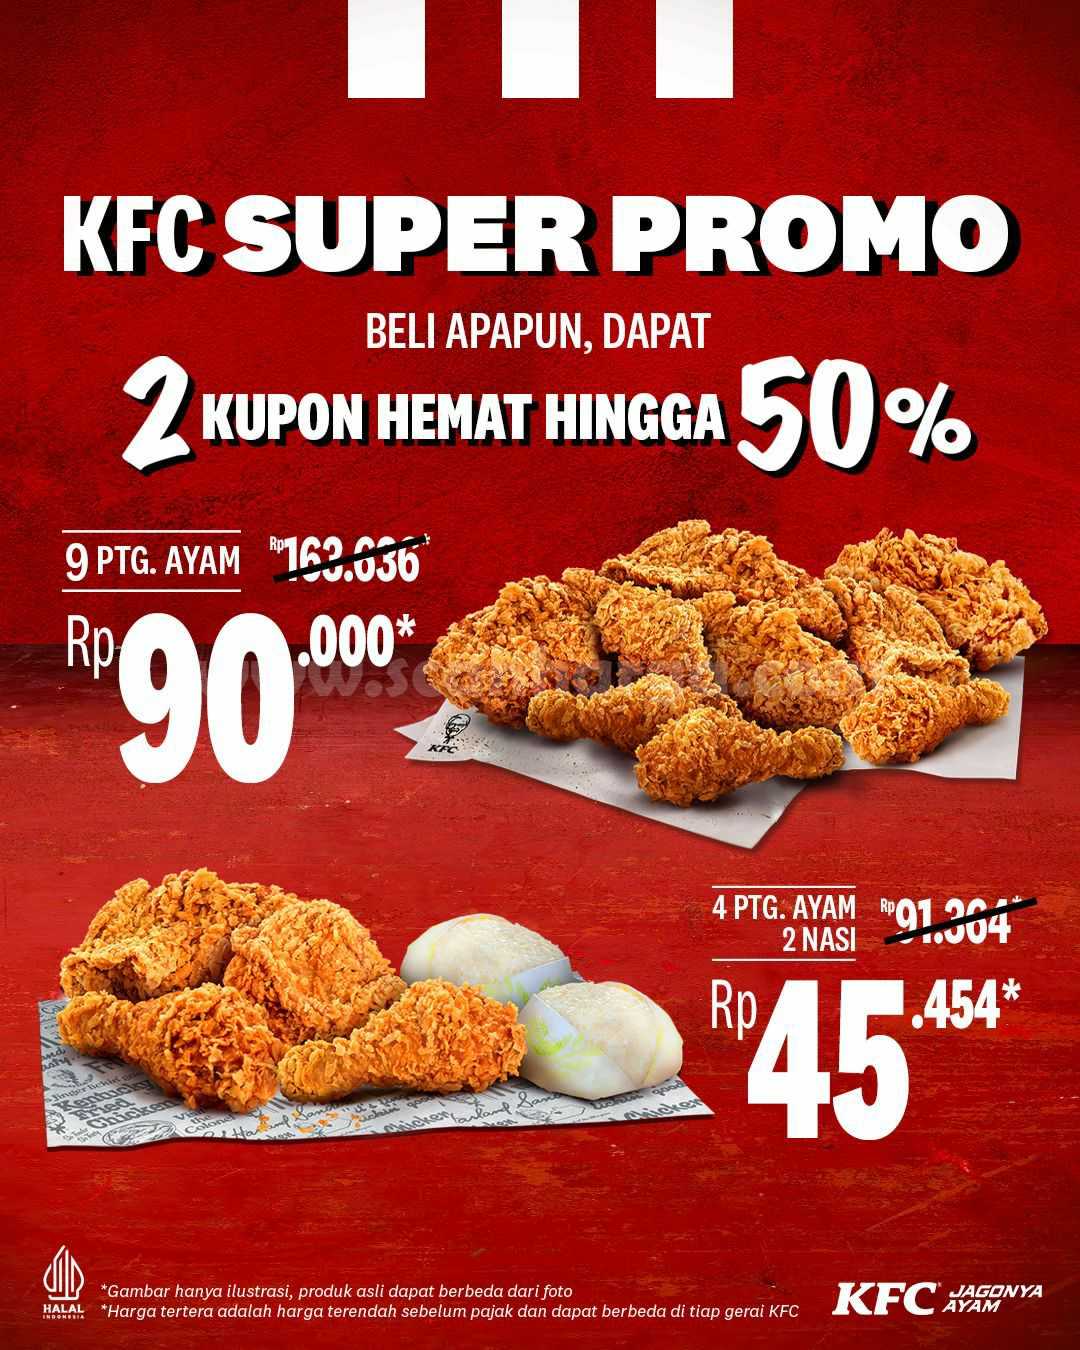 Promo KFC SUPER PROMO 2 KUPON HEMAT HINGGA 50%